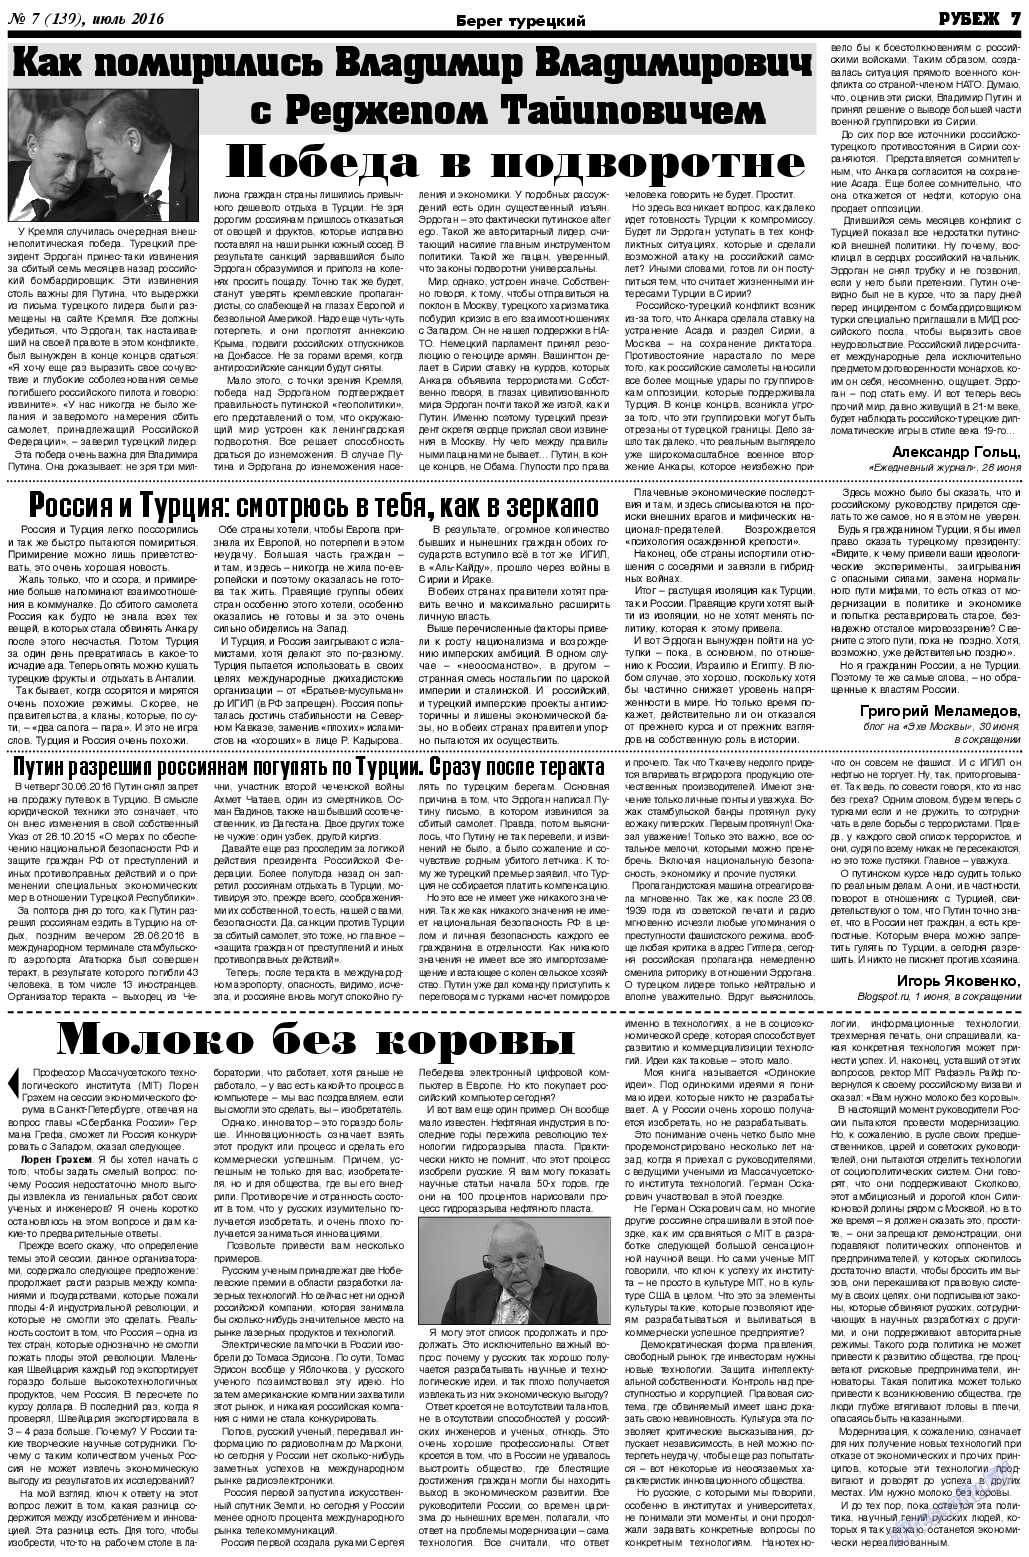 Рубеж, газета. 2016 №7 стр.7